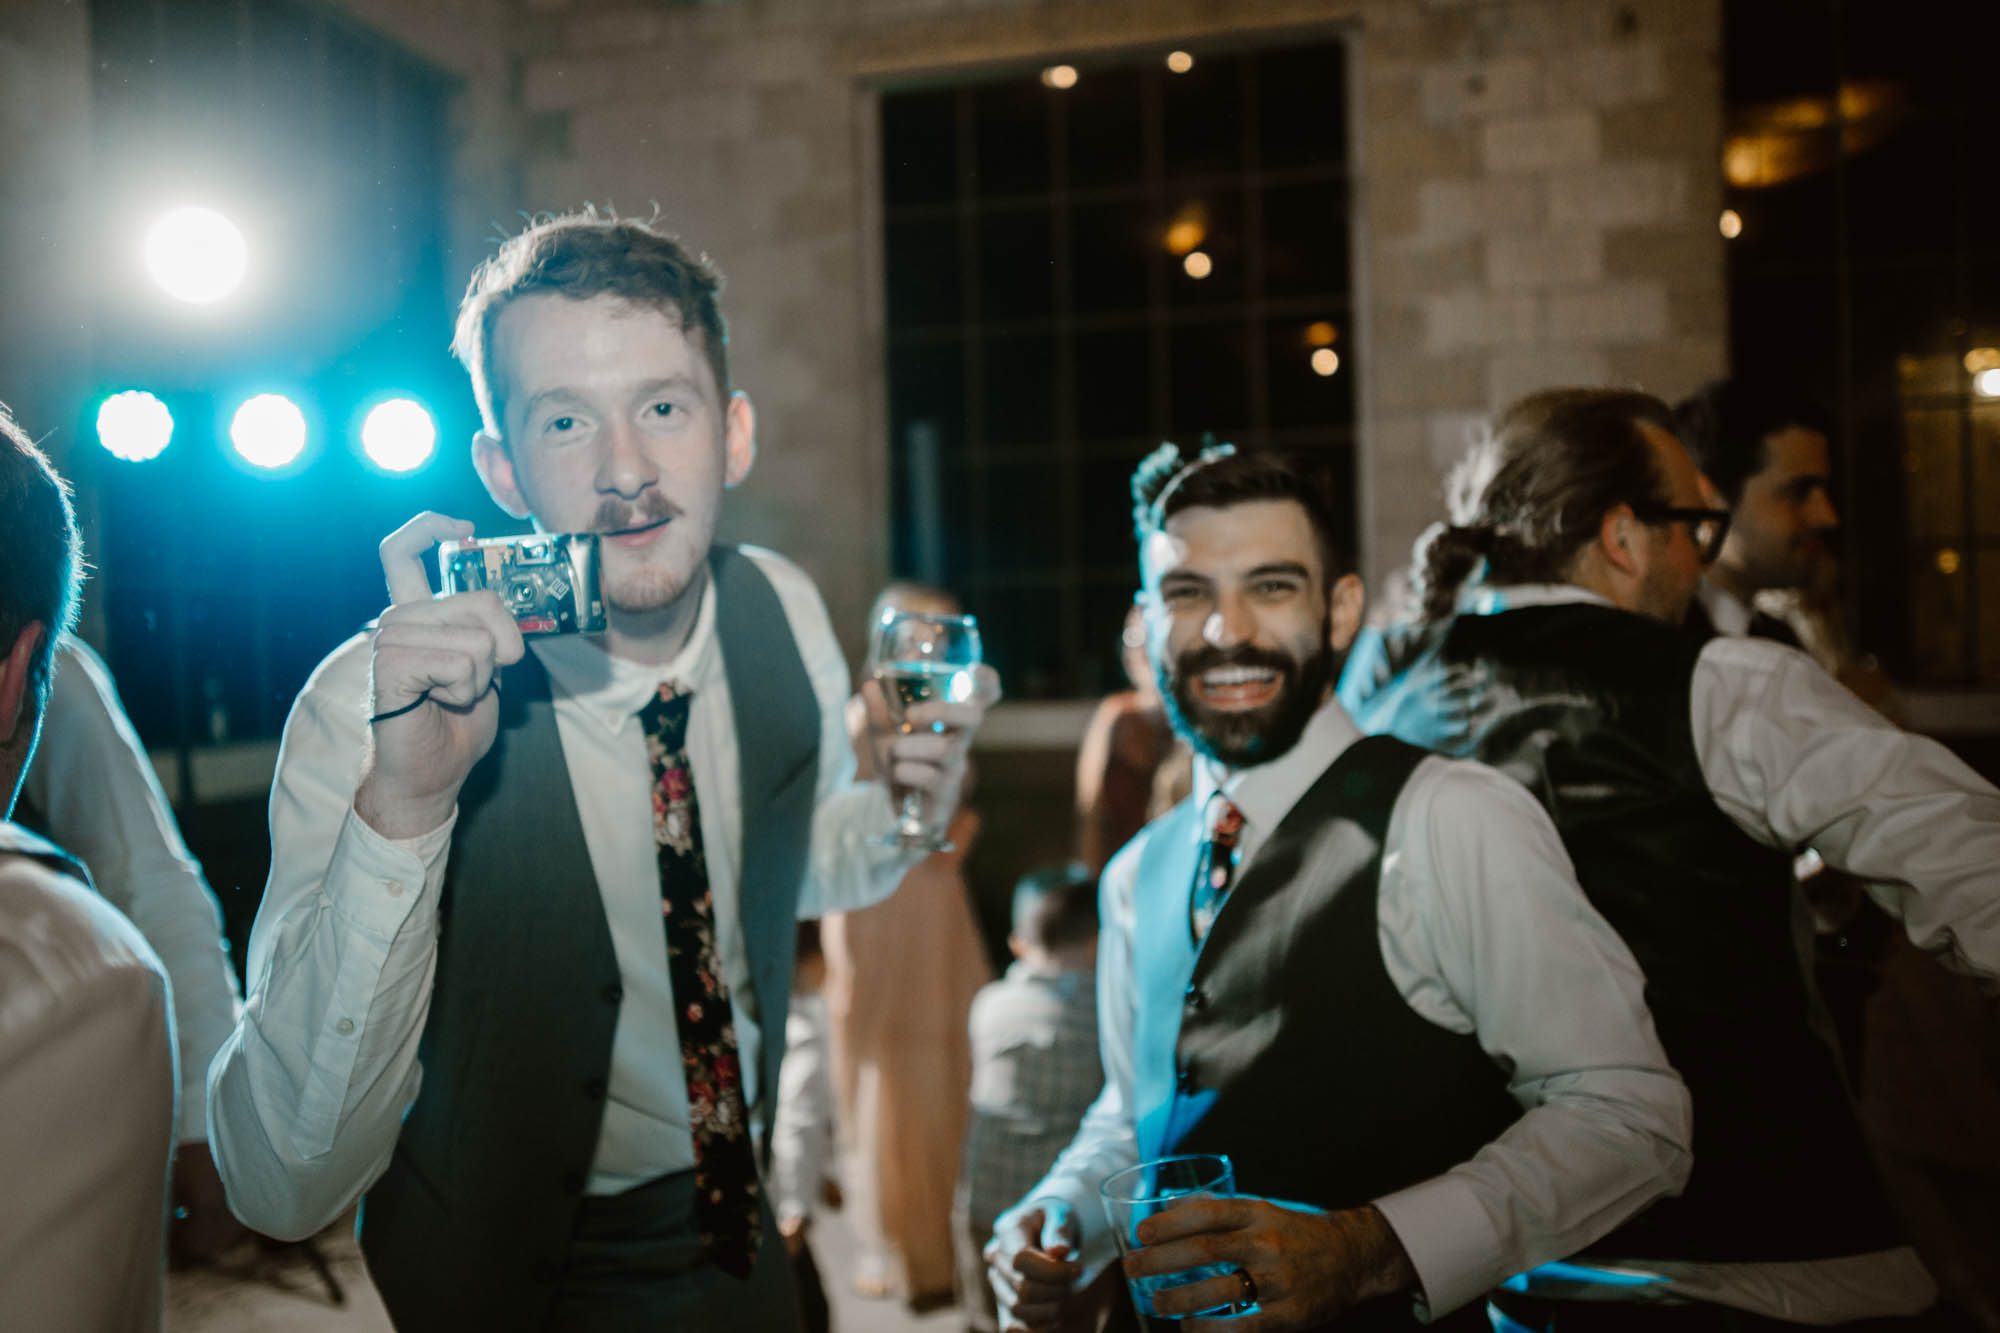 Alcohol at Weddings